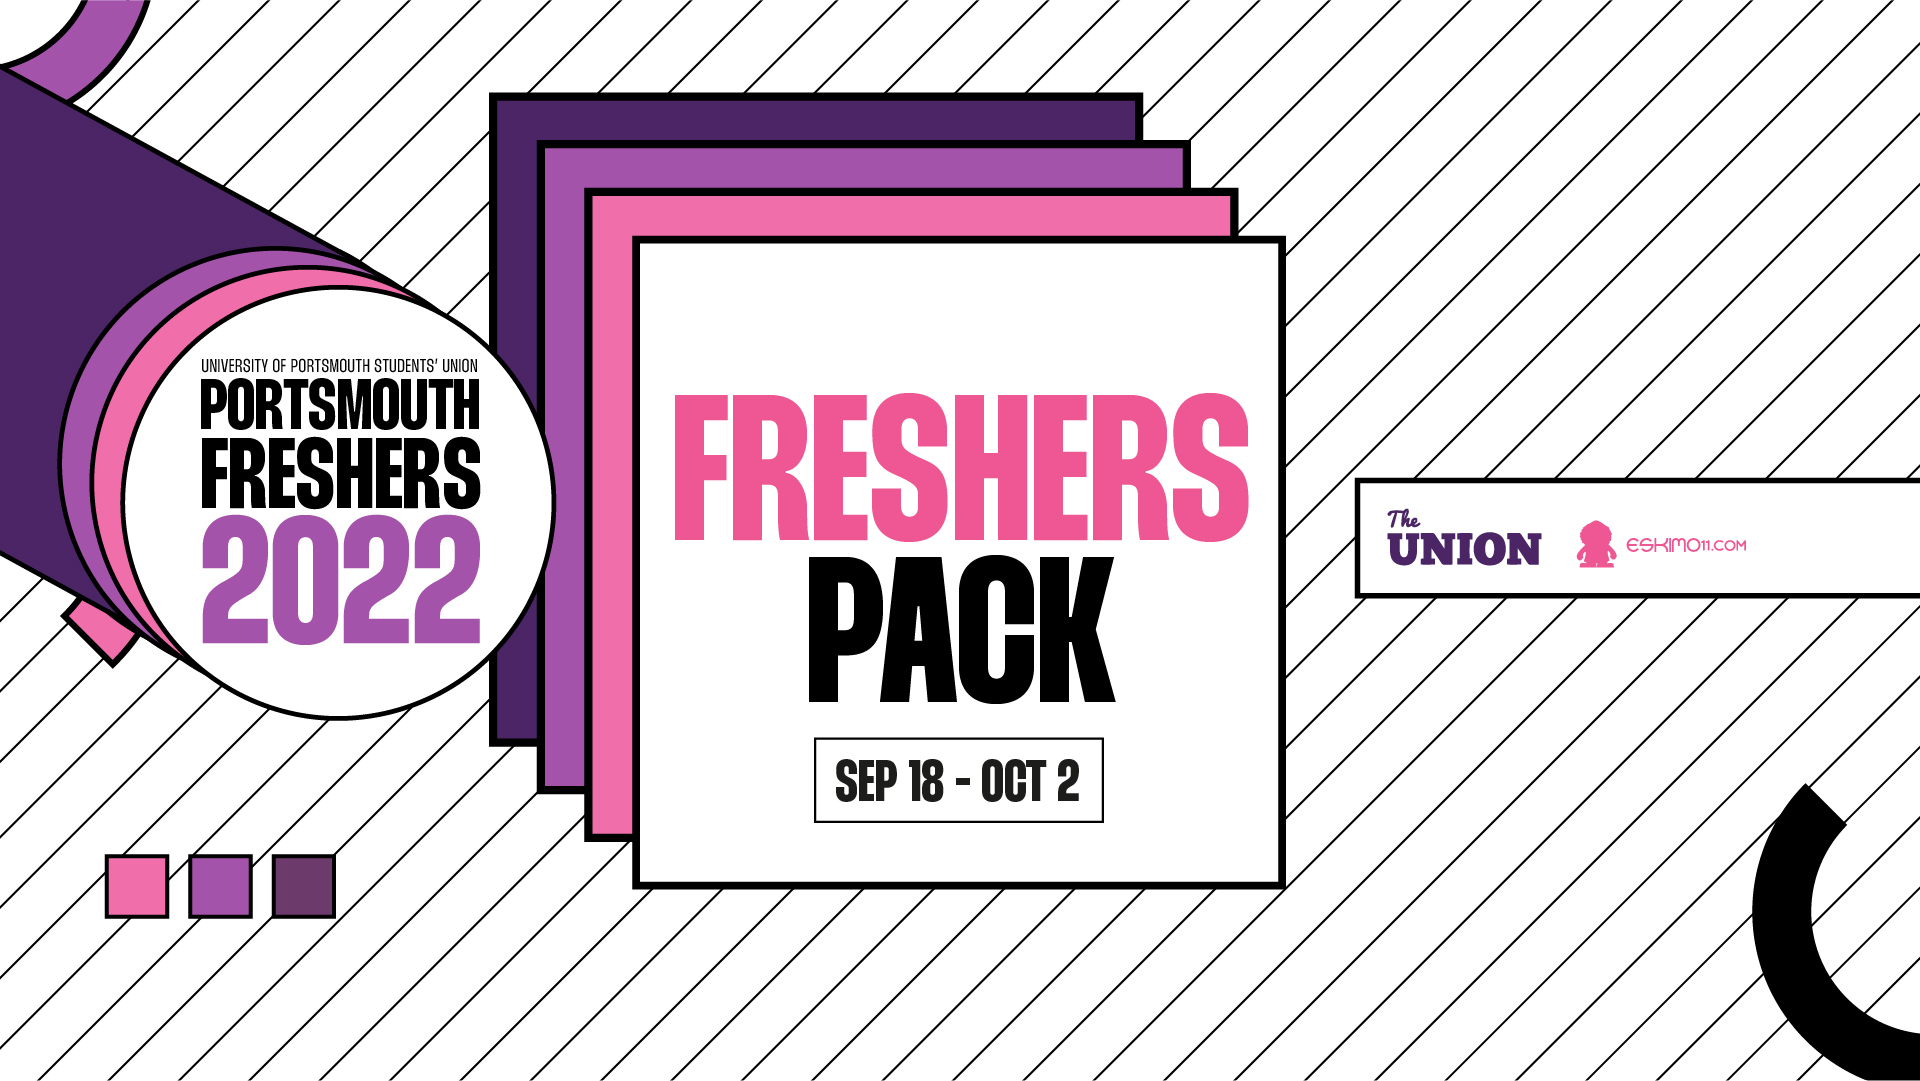 University of Portsmouth Students union Freshers ticket pack